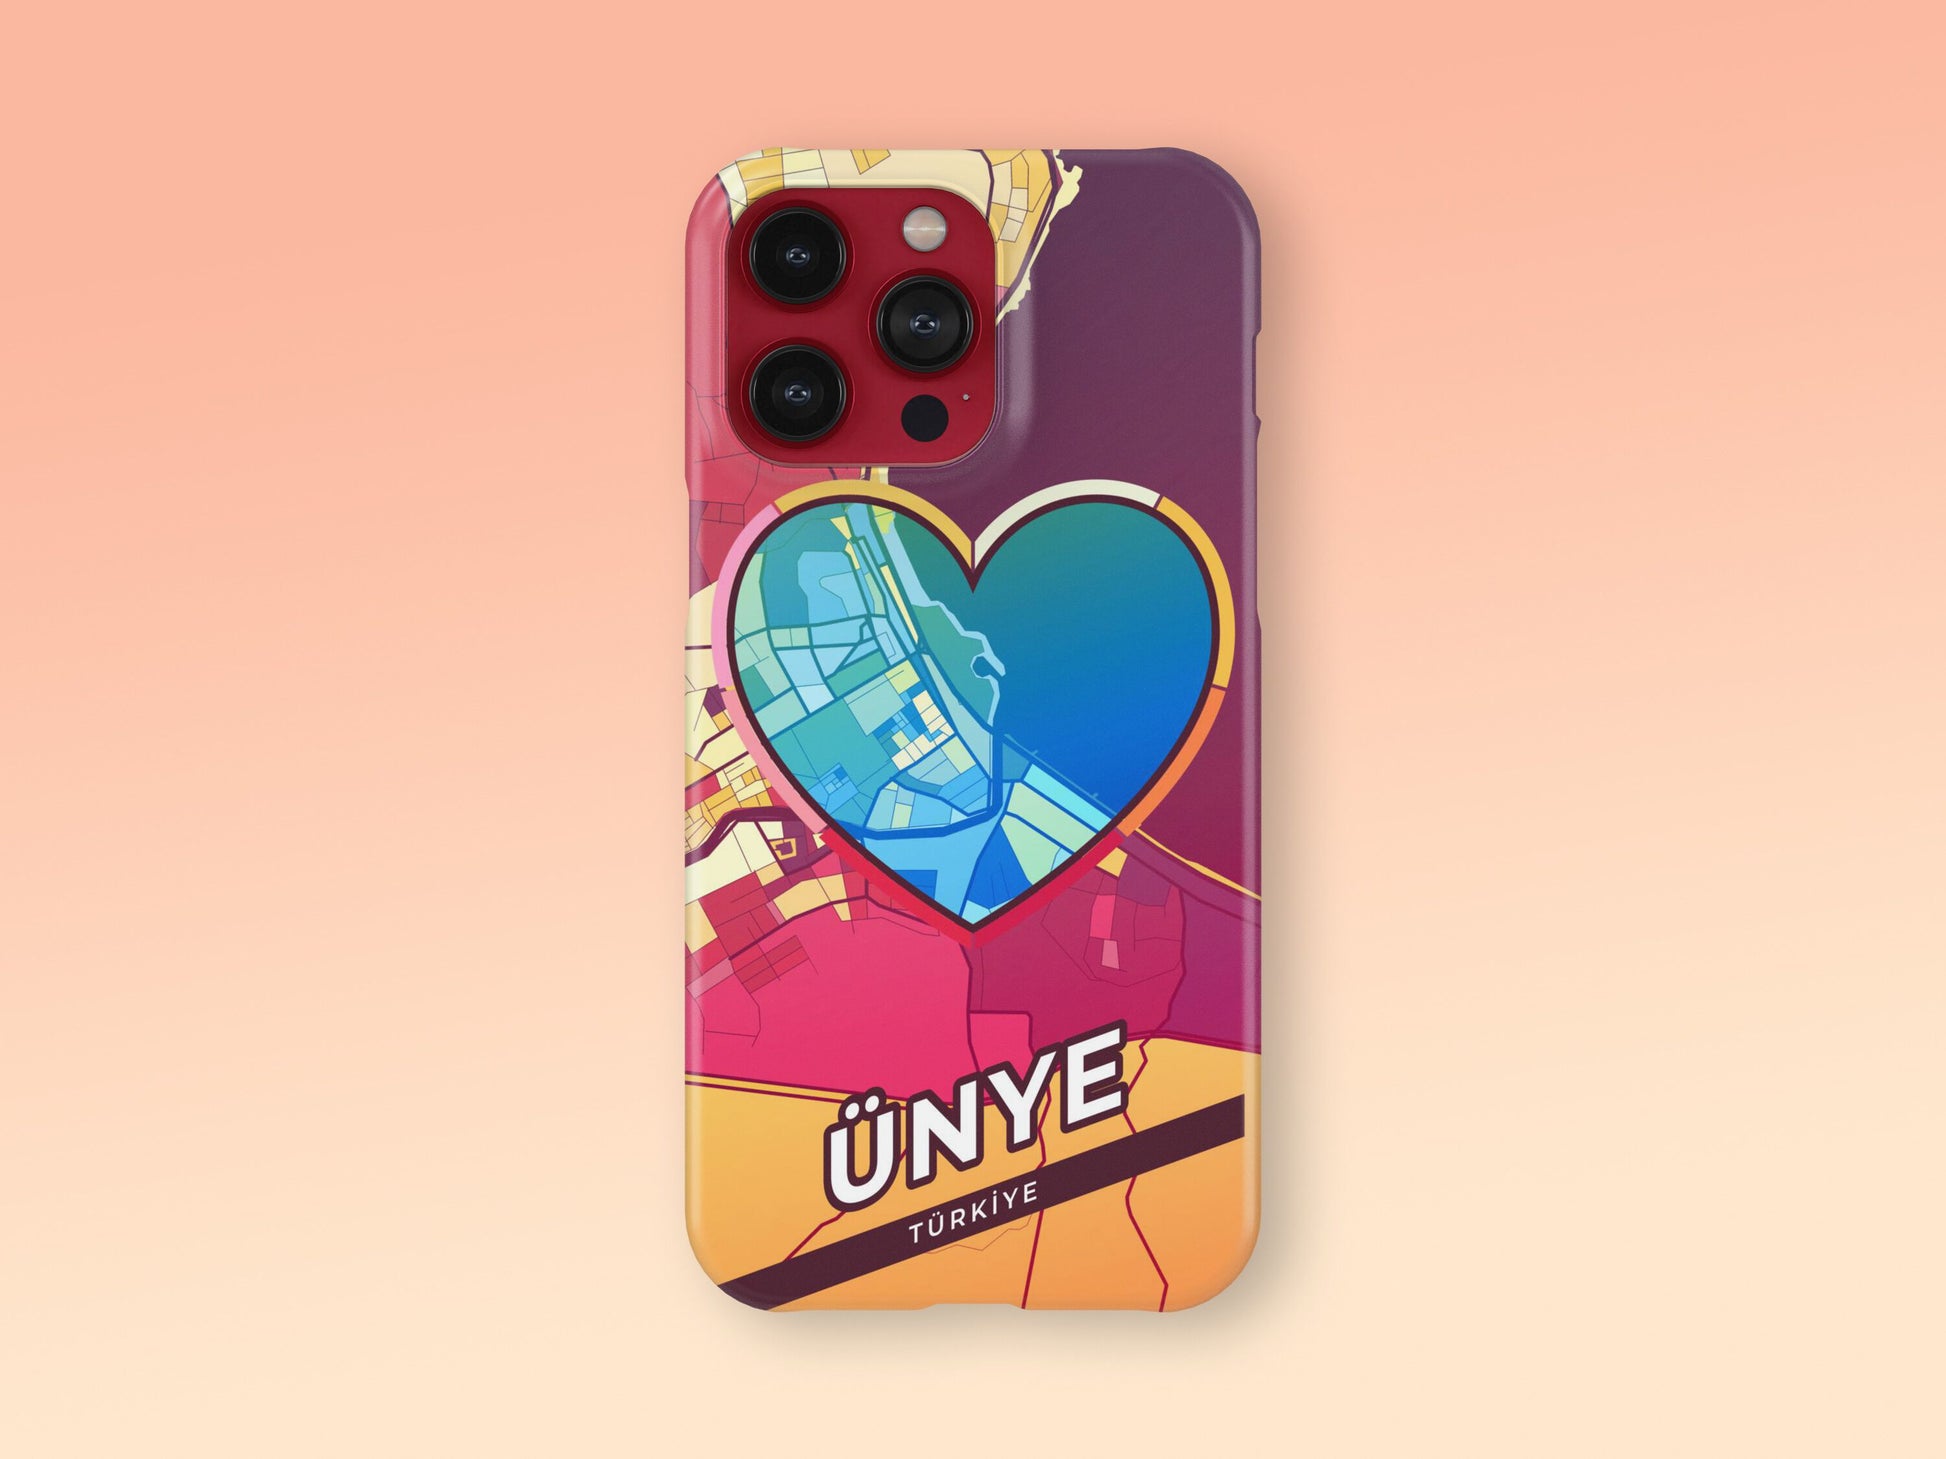 Ünye Turkey slim phone case with colorful icon 2